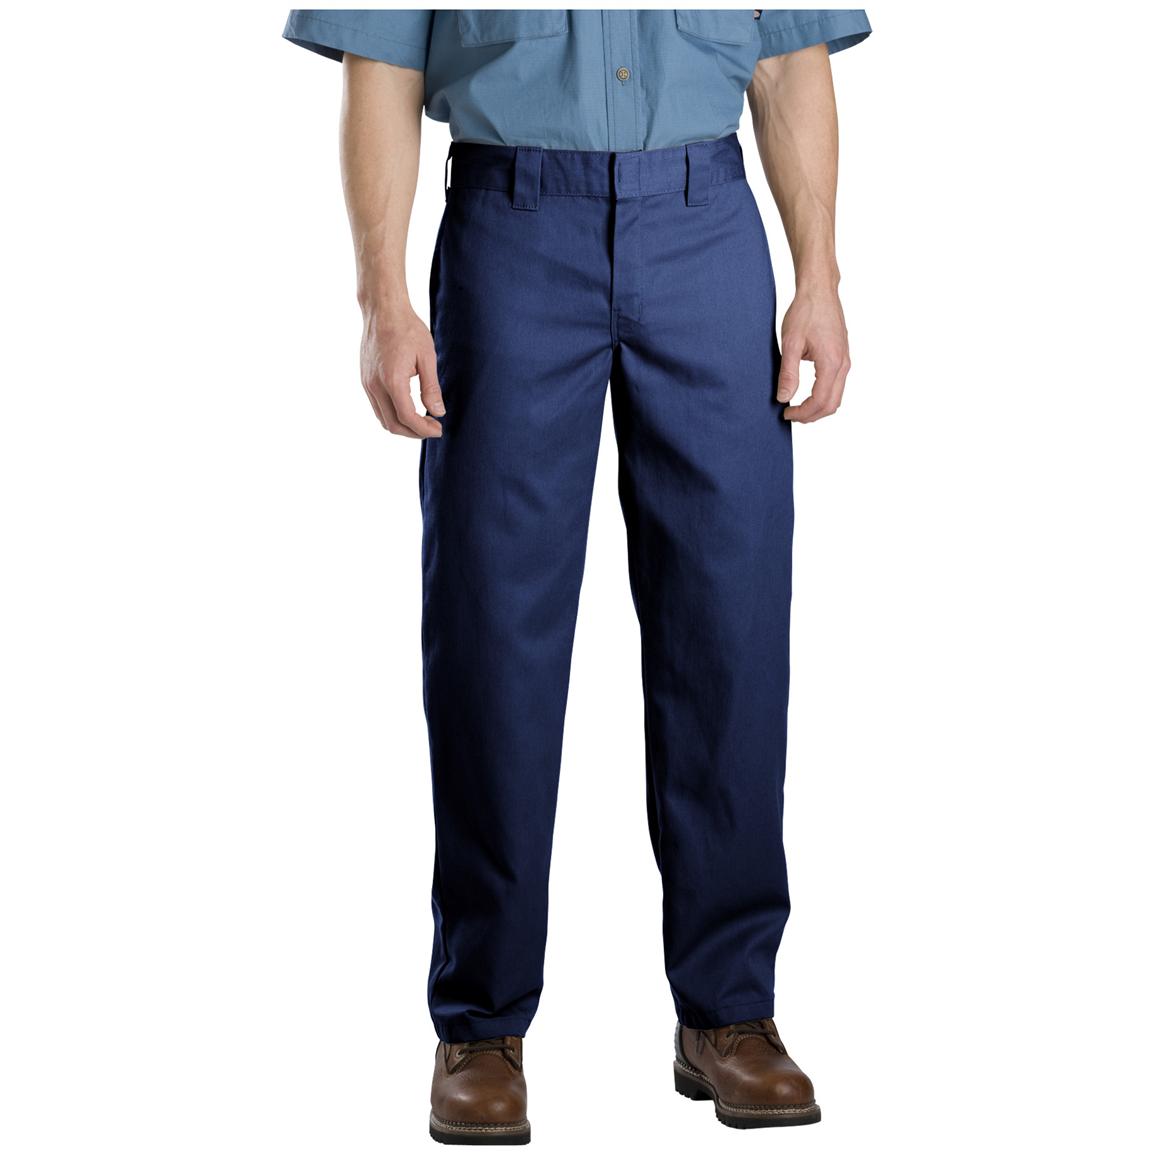 5.11 Tactical® Class A Uniform Pants, Navy - 229070, Jeans & Pants at ...